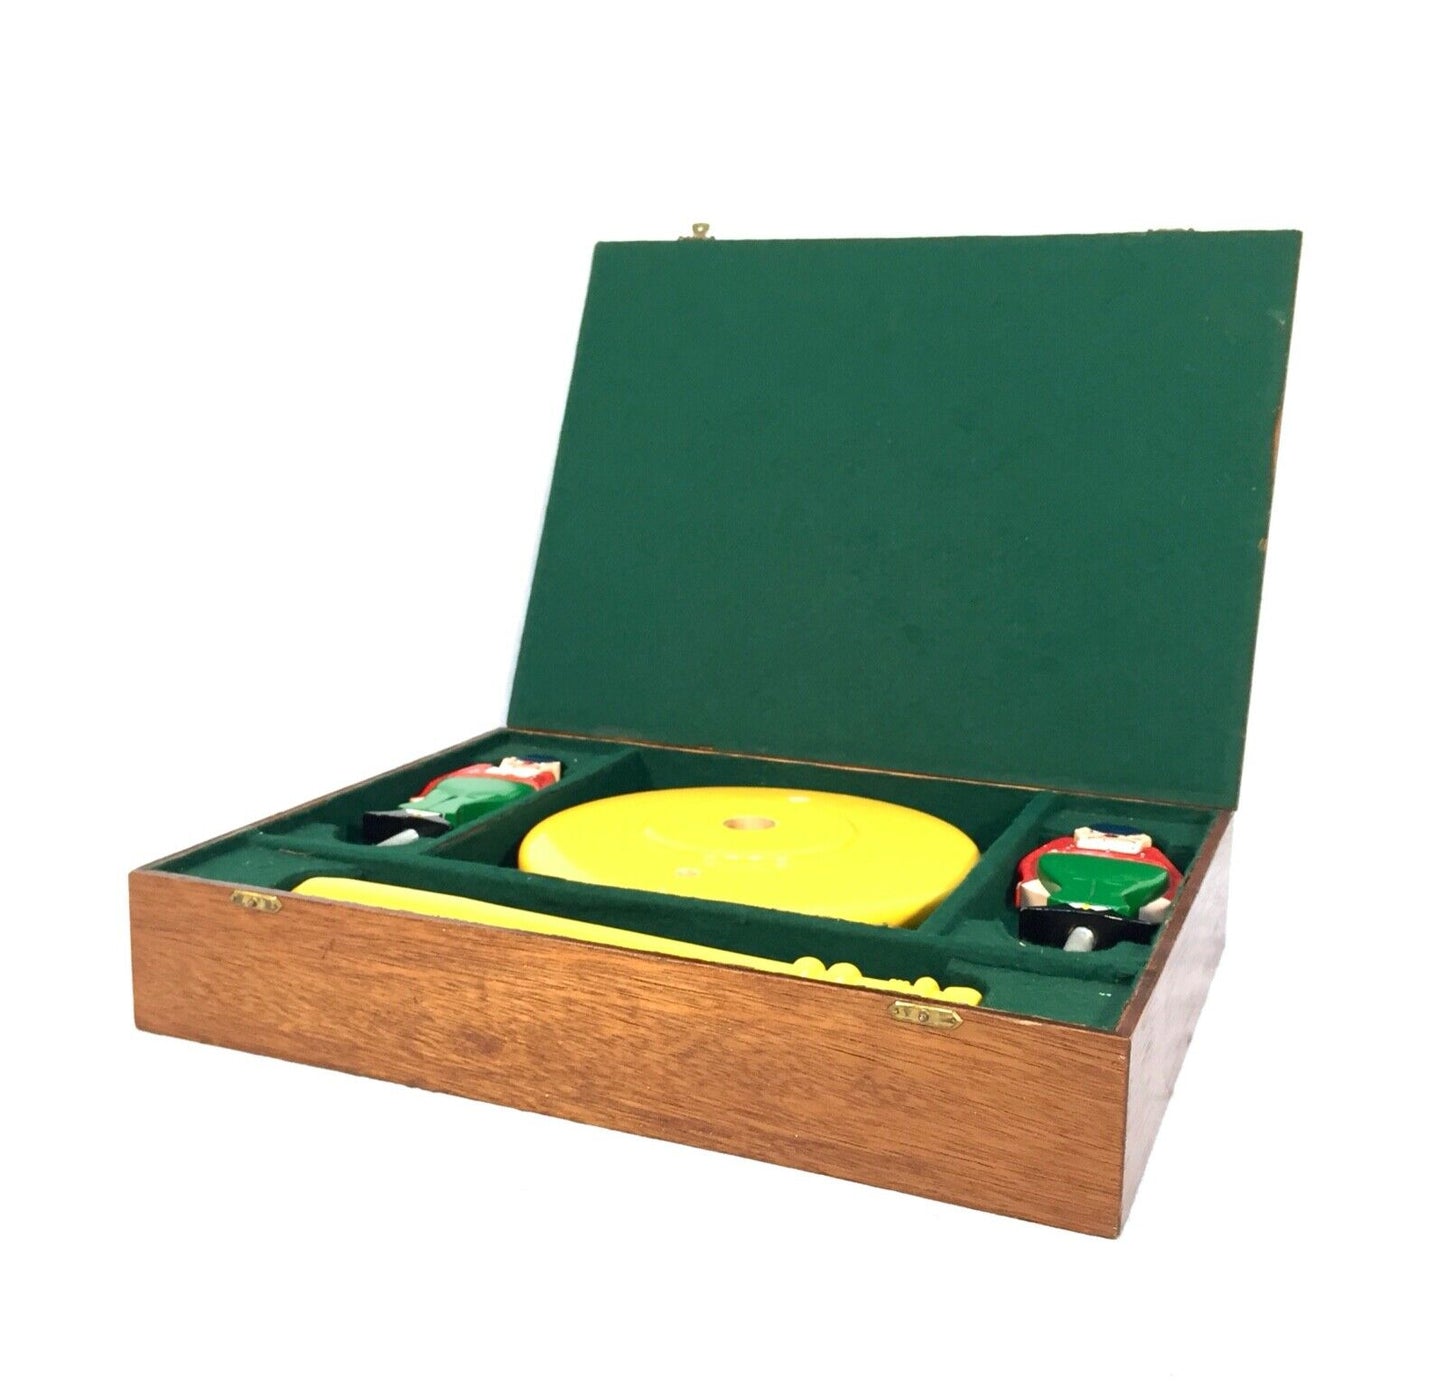 Vintage Tweedledum and Tweedledee Homemade Toy in Presentation Box / Antique